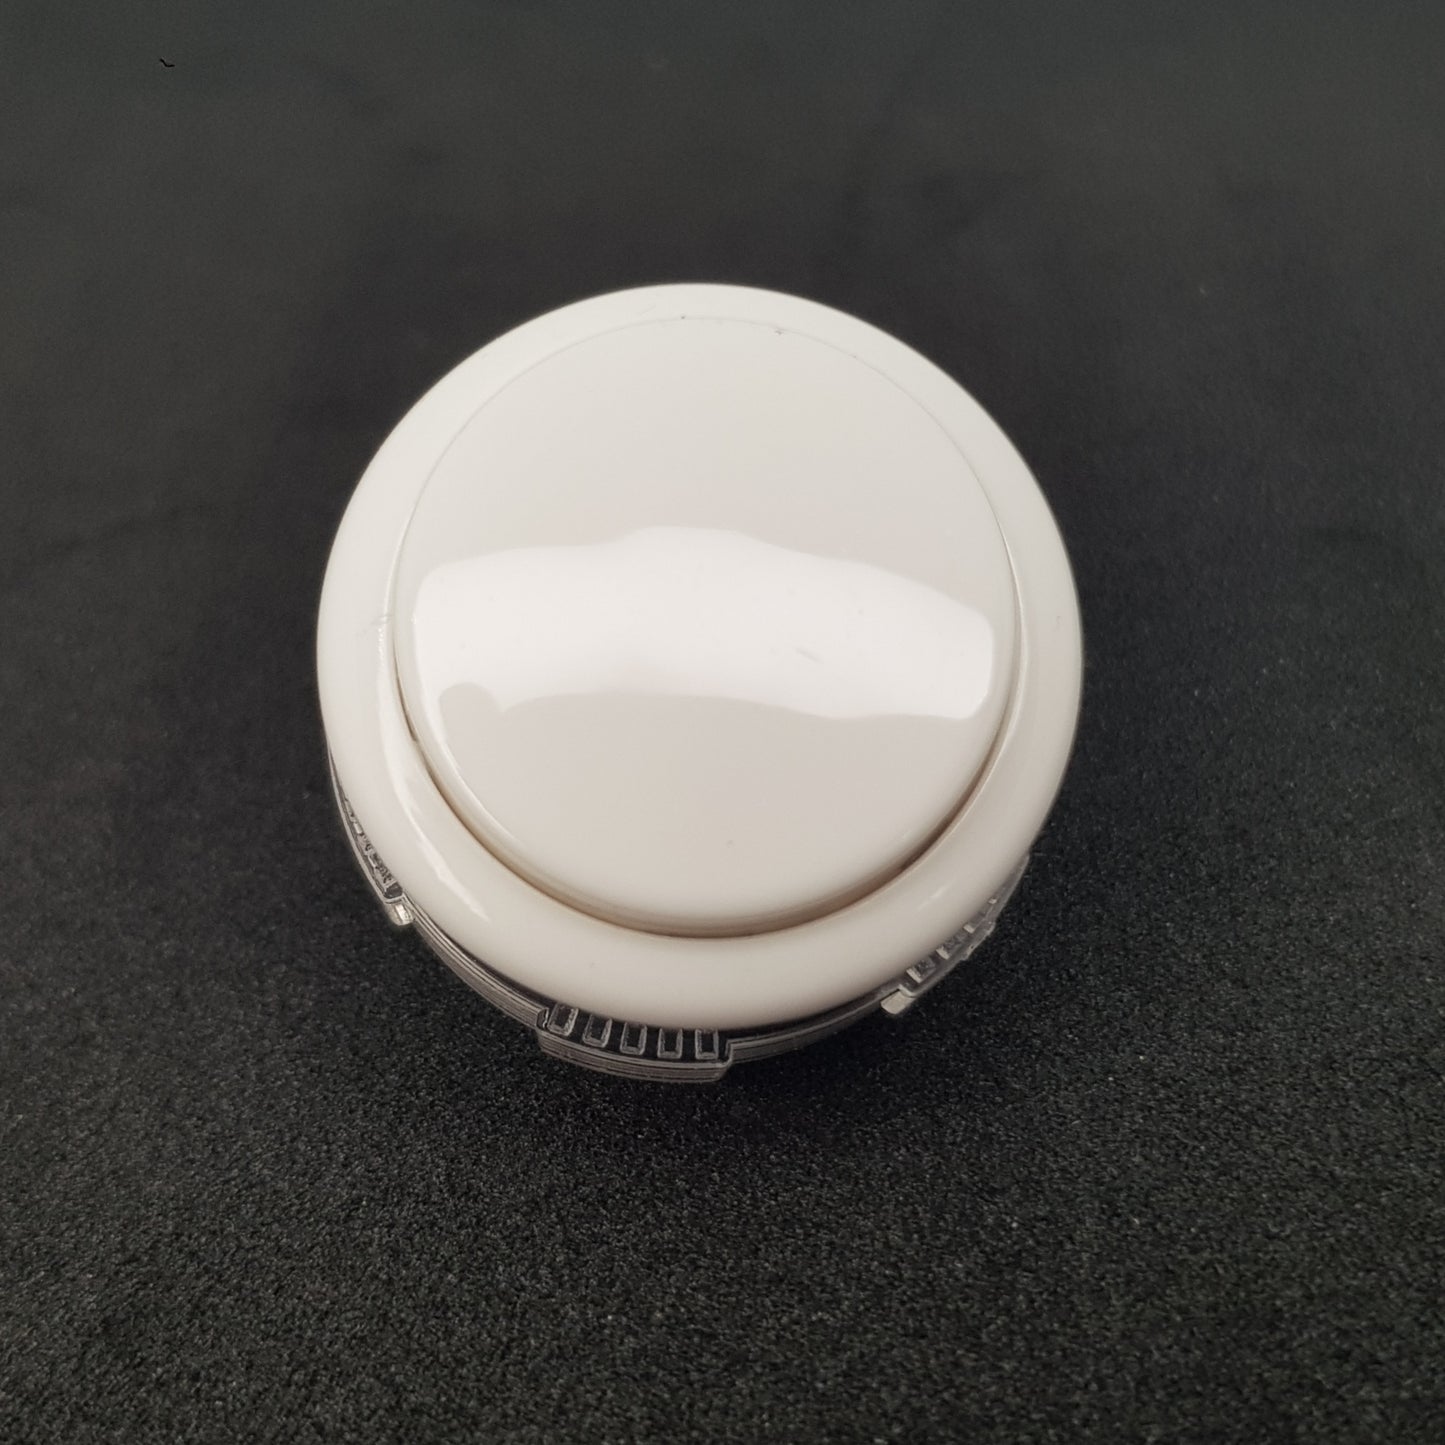 Samducksa (aka. Crown) SDB-202 push button [Cherry MX Silver stem]